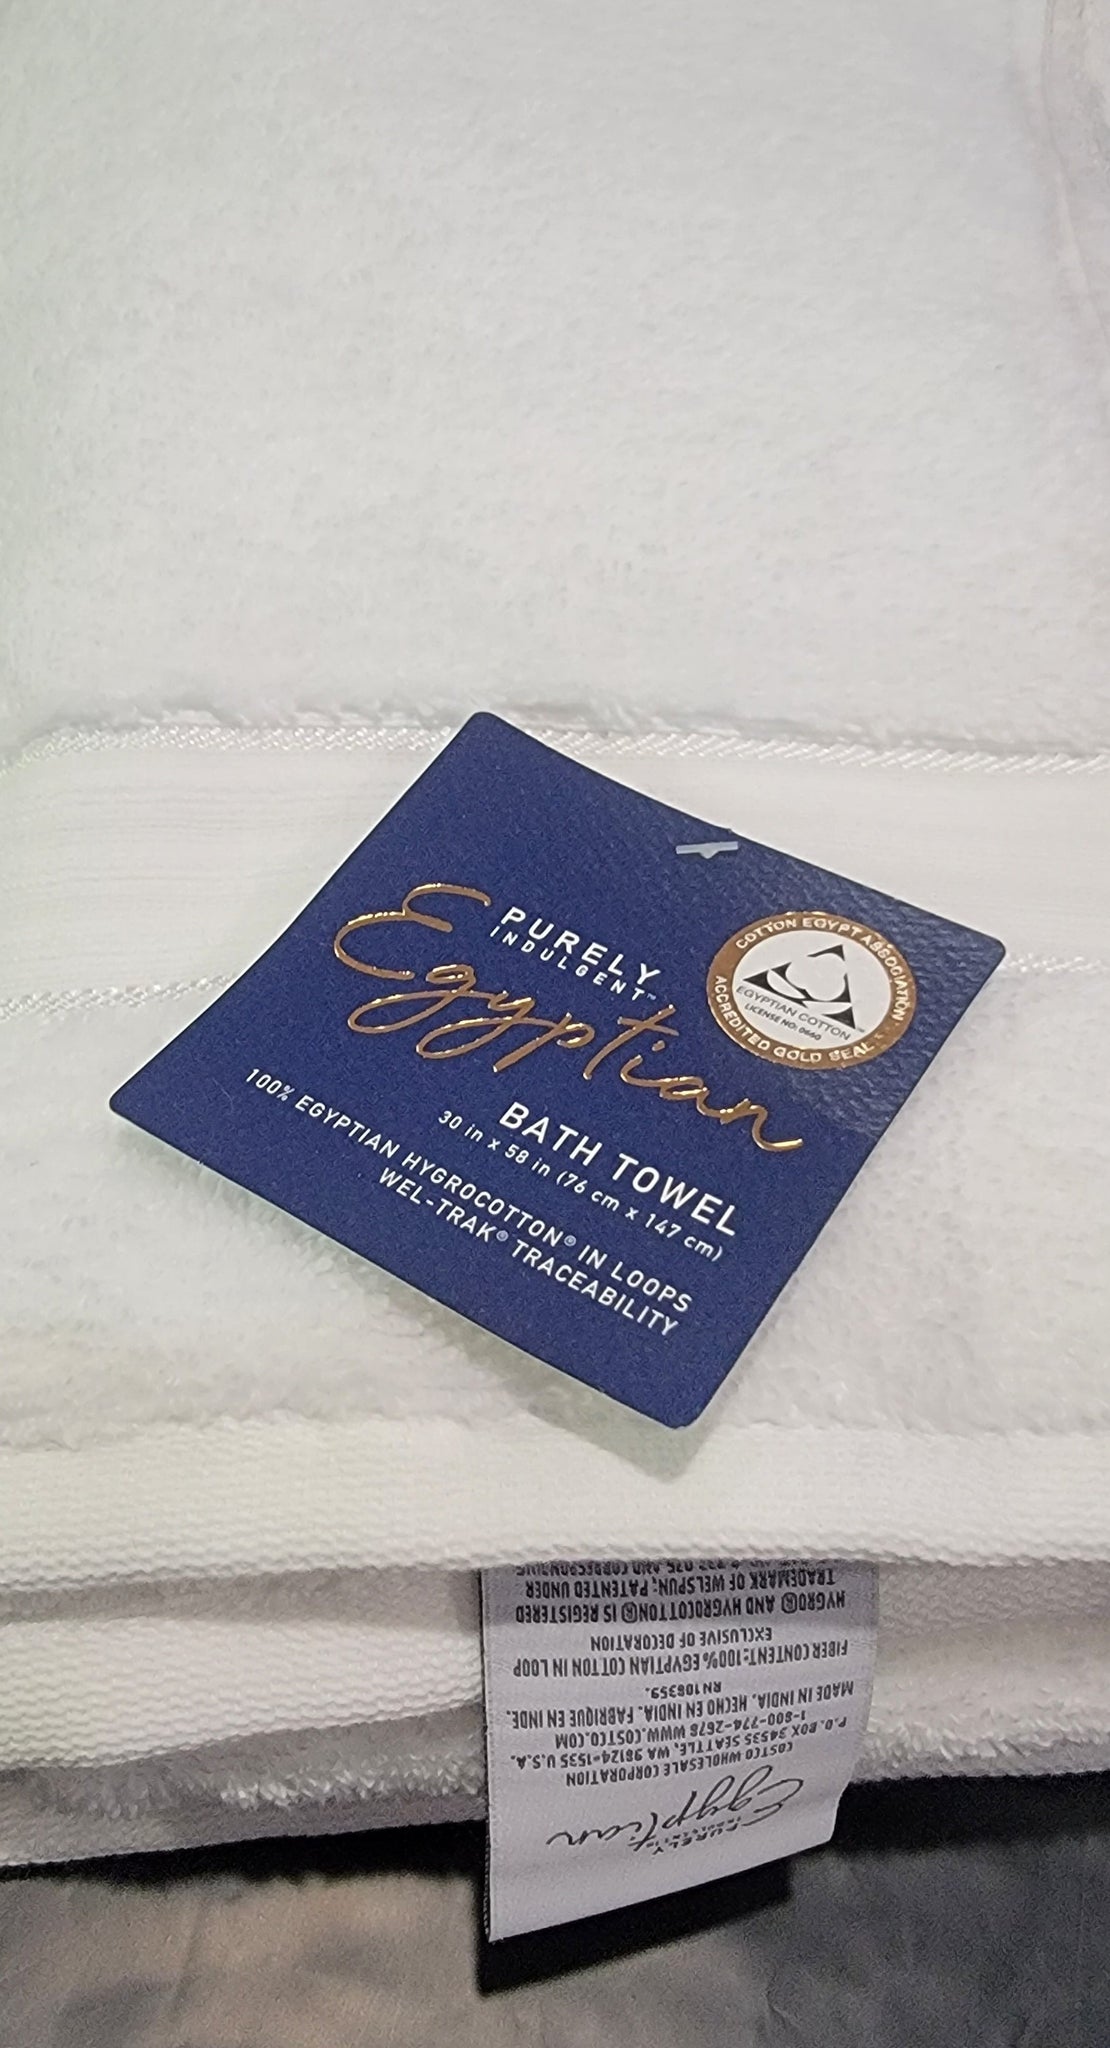 Purely Indulgent Egyptian Cotton Bath Towel, White 30 x 58 1-towel –